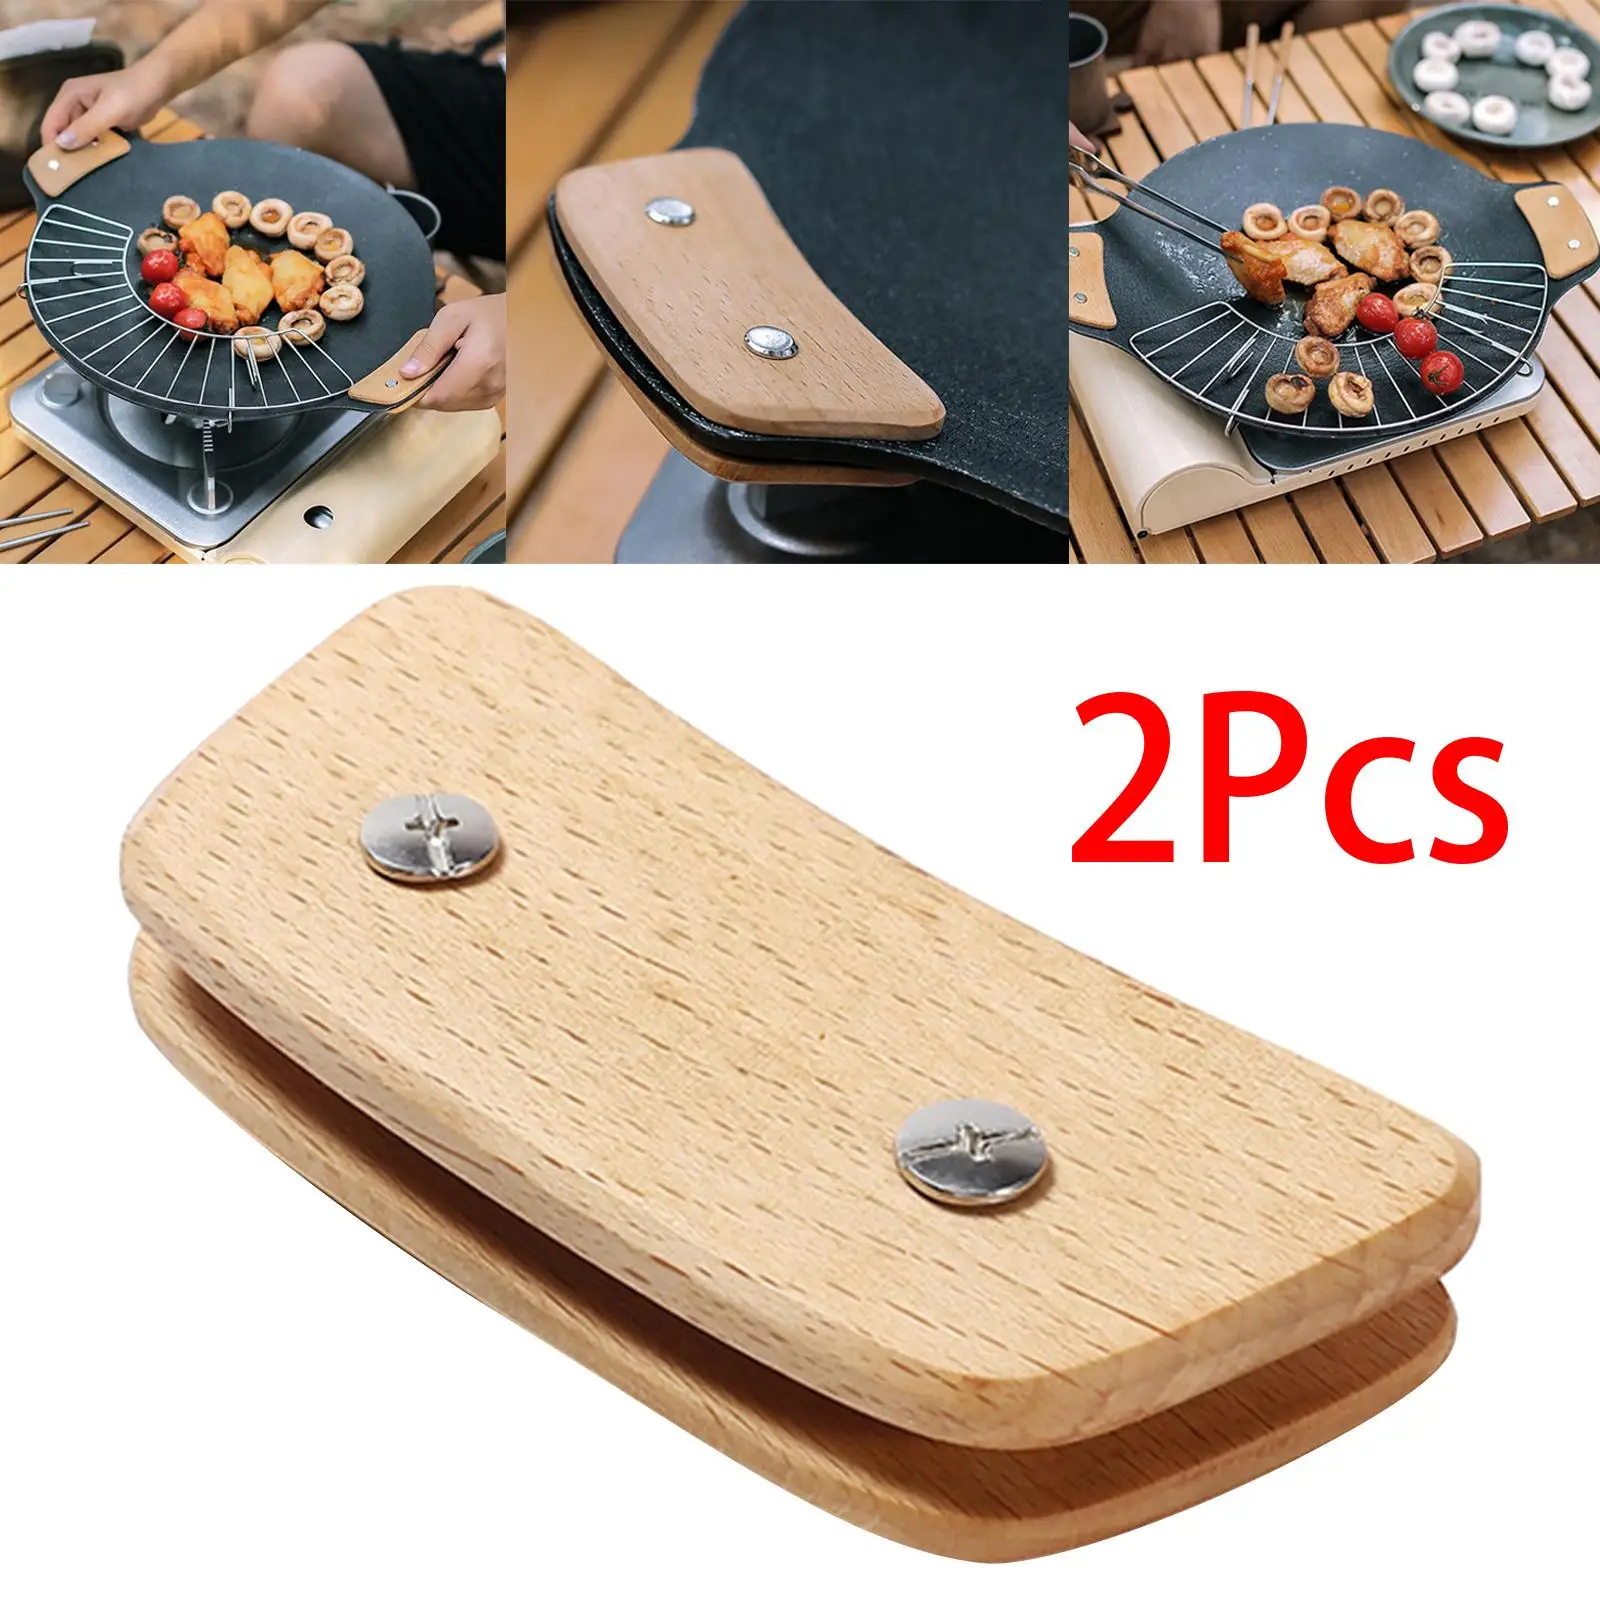 Wooden BBQ Pan Handle Grip Heat Resistant for Sauteing Grilling Pan Sauce Pan Outdoor